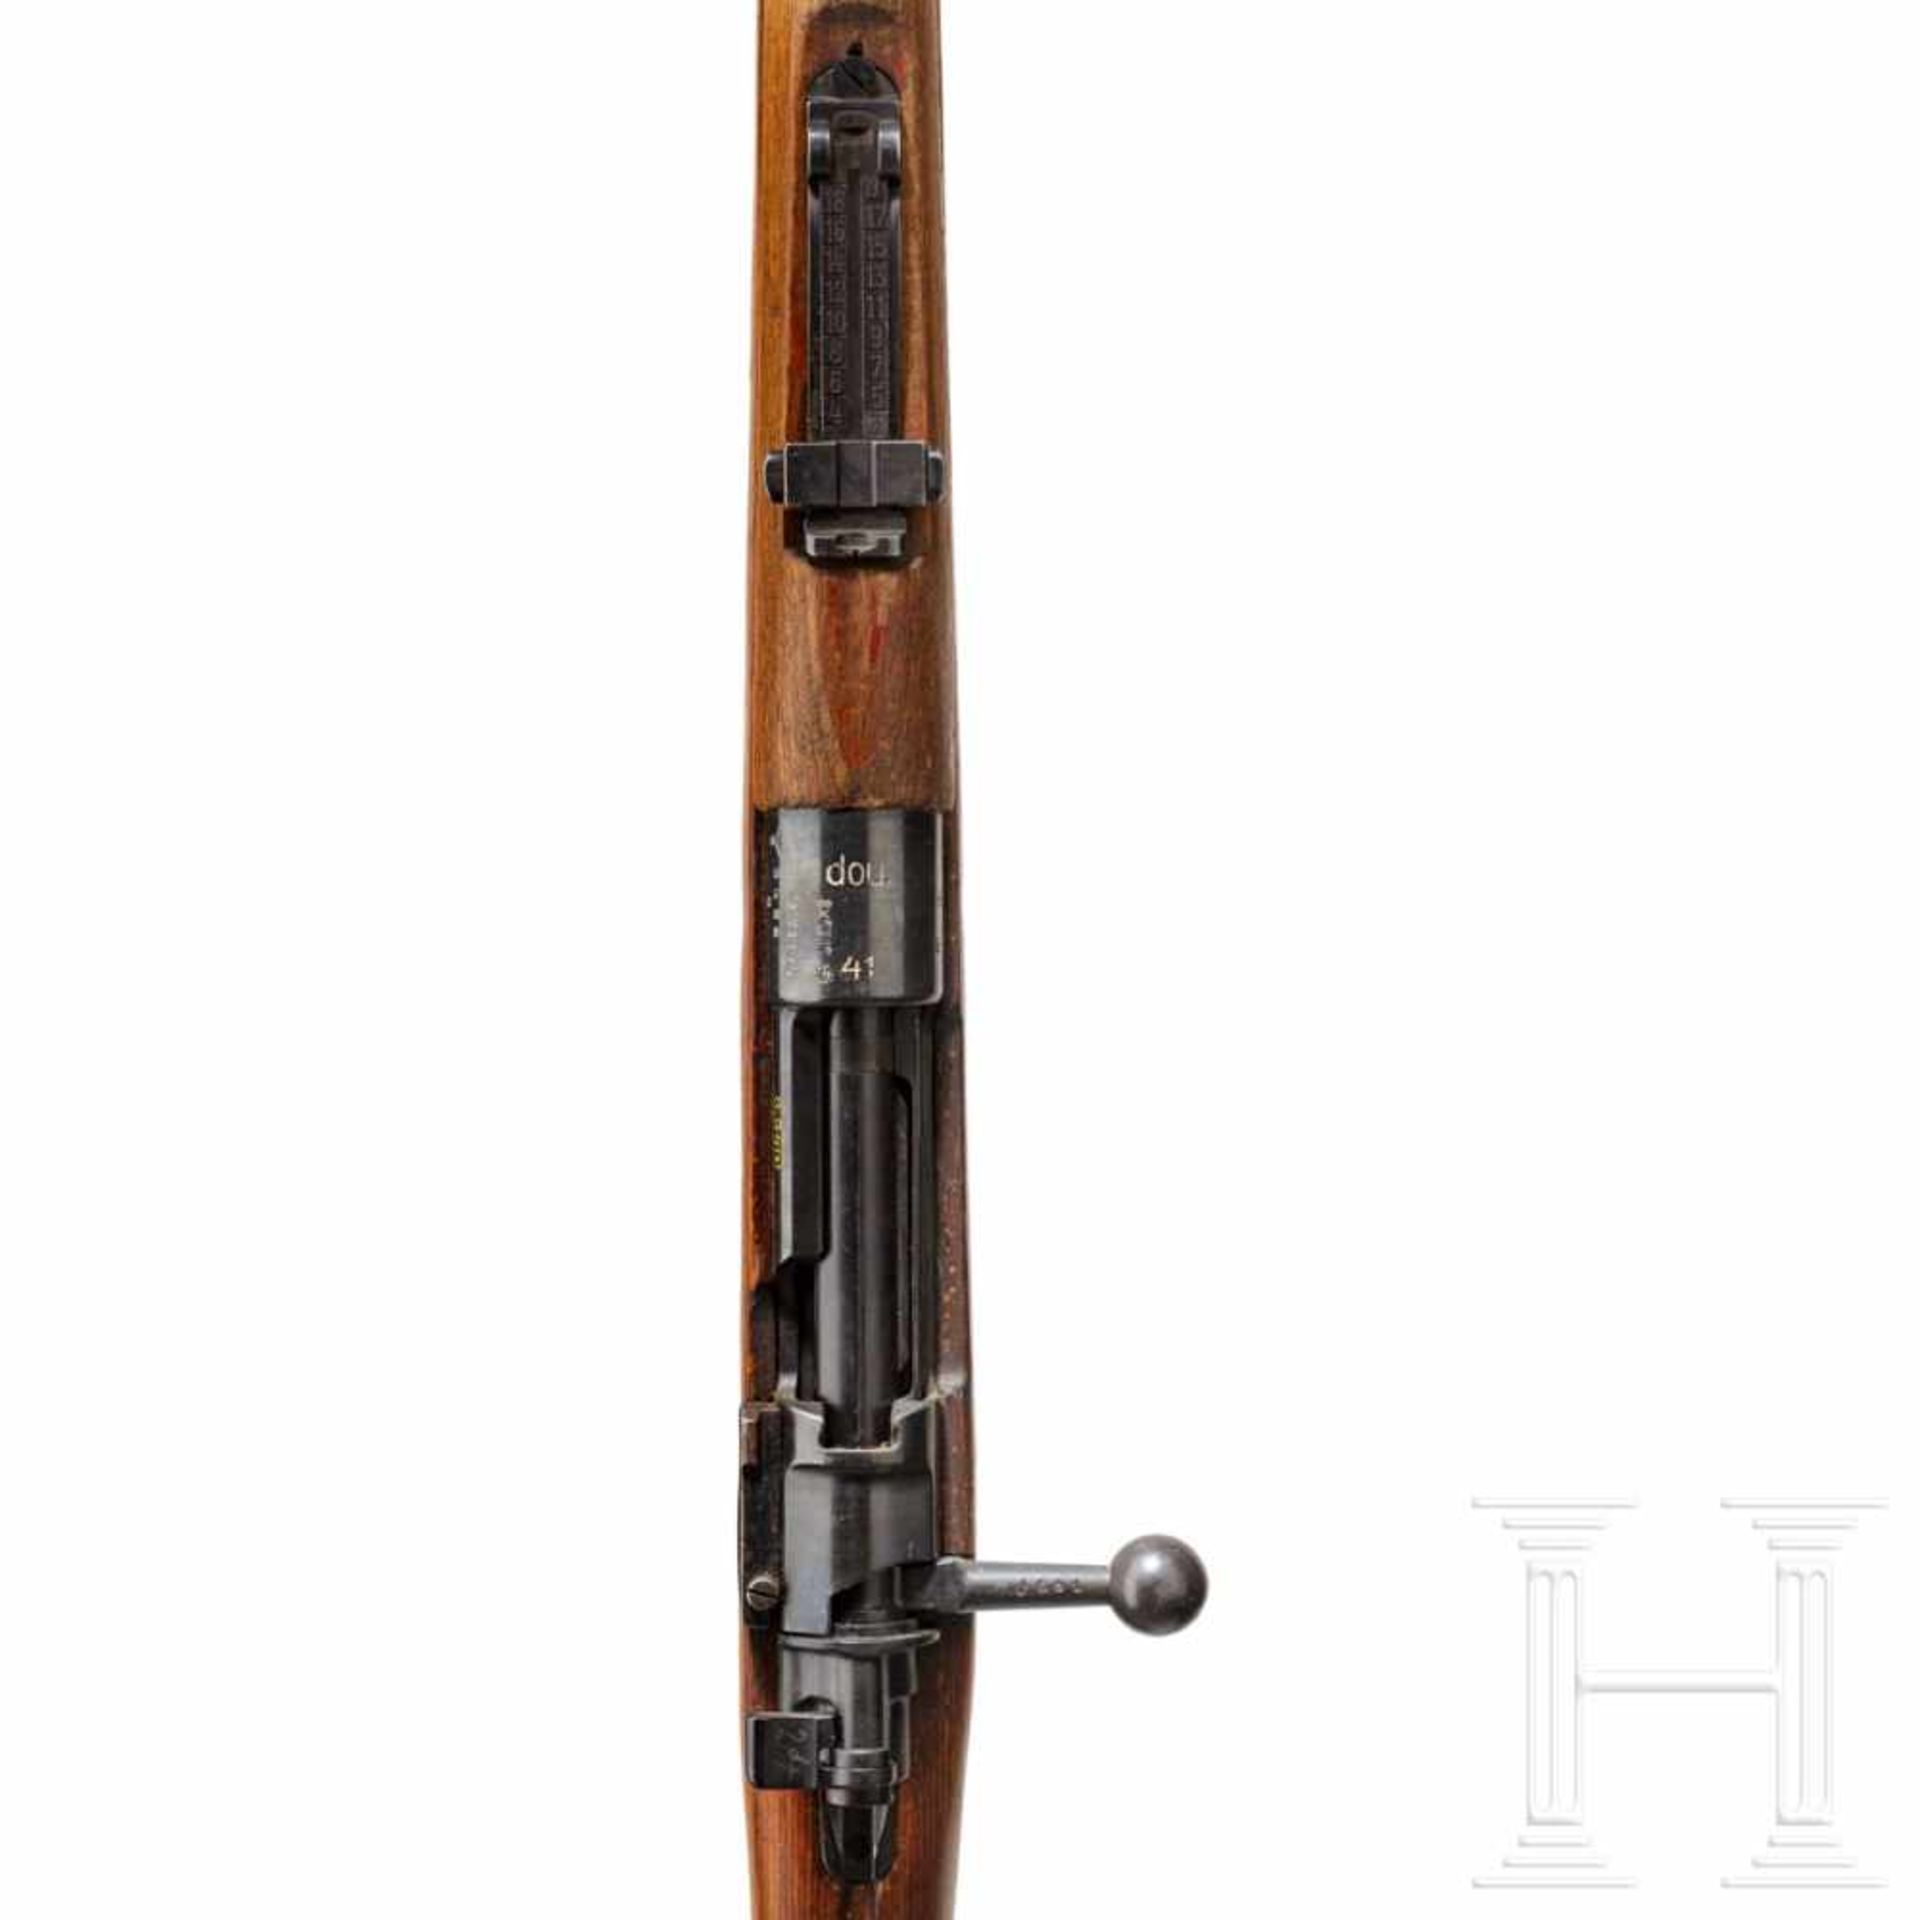 A rifle "G 24(t), code "dou - 41"Kal. 8x57 IS, Nr. 6486a, Verschluss nicht nummerngleich, alle - Bild 3 aus 3